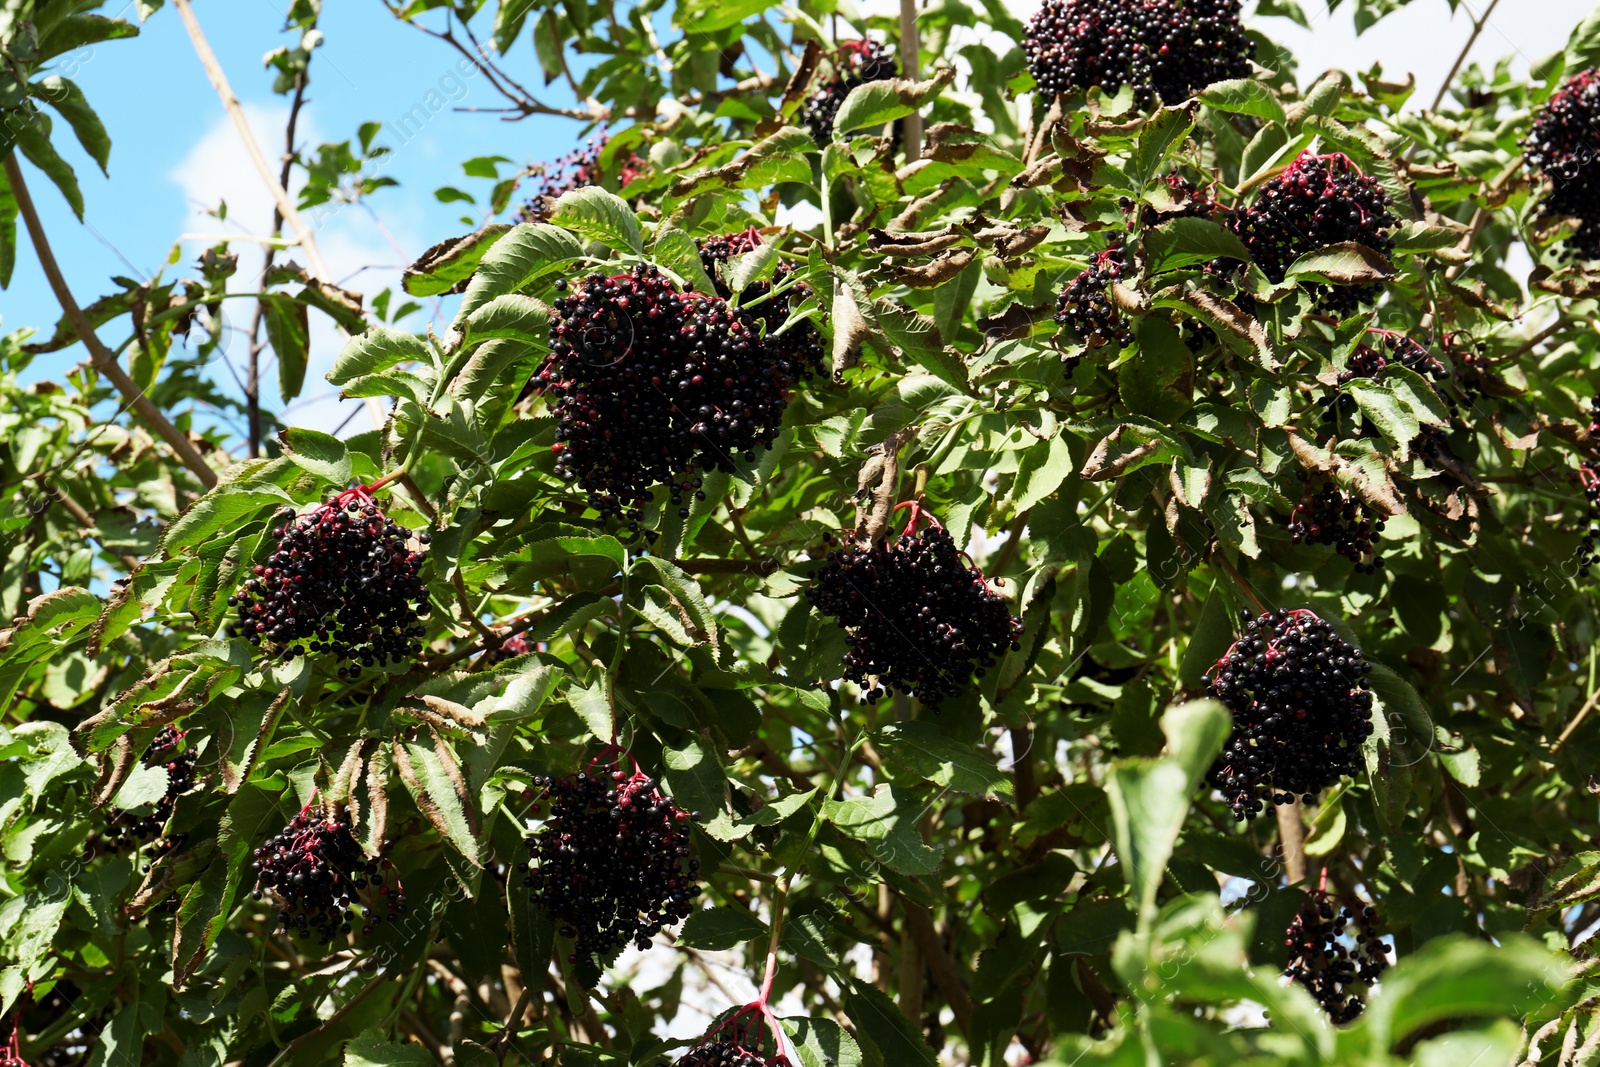 Photo of Tasty elderberries (Sambucus) growing on bush outdoors